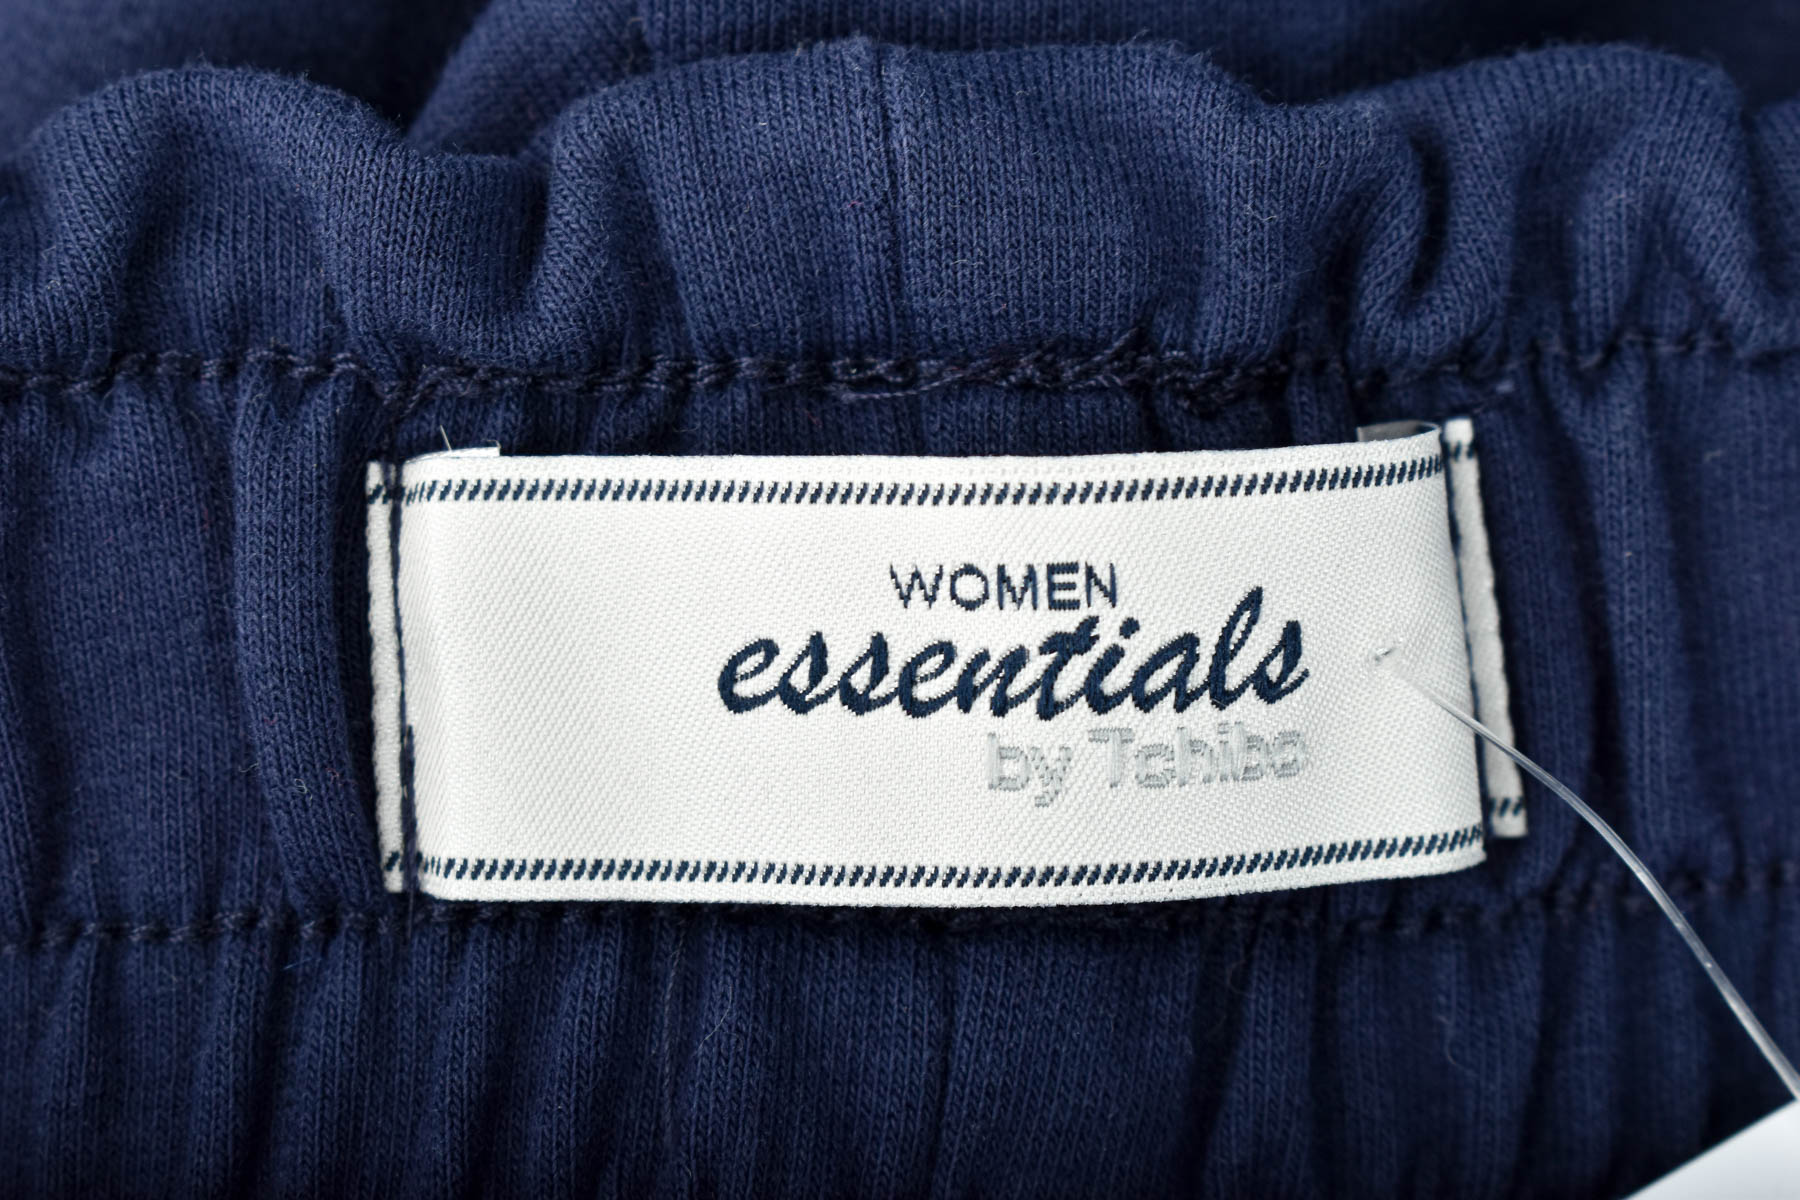 Female shorts - WOMEN essentials by Tchibo - 2